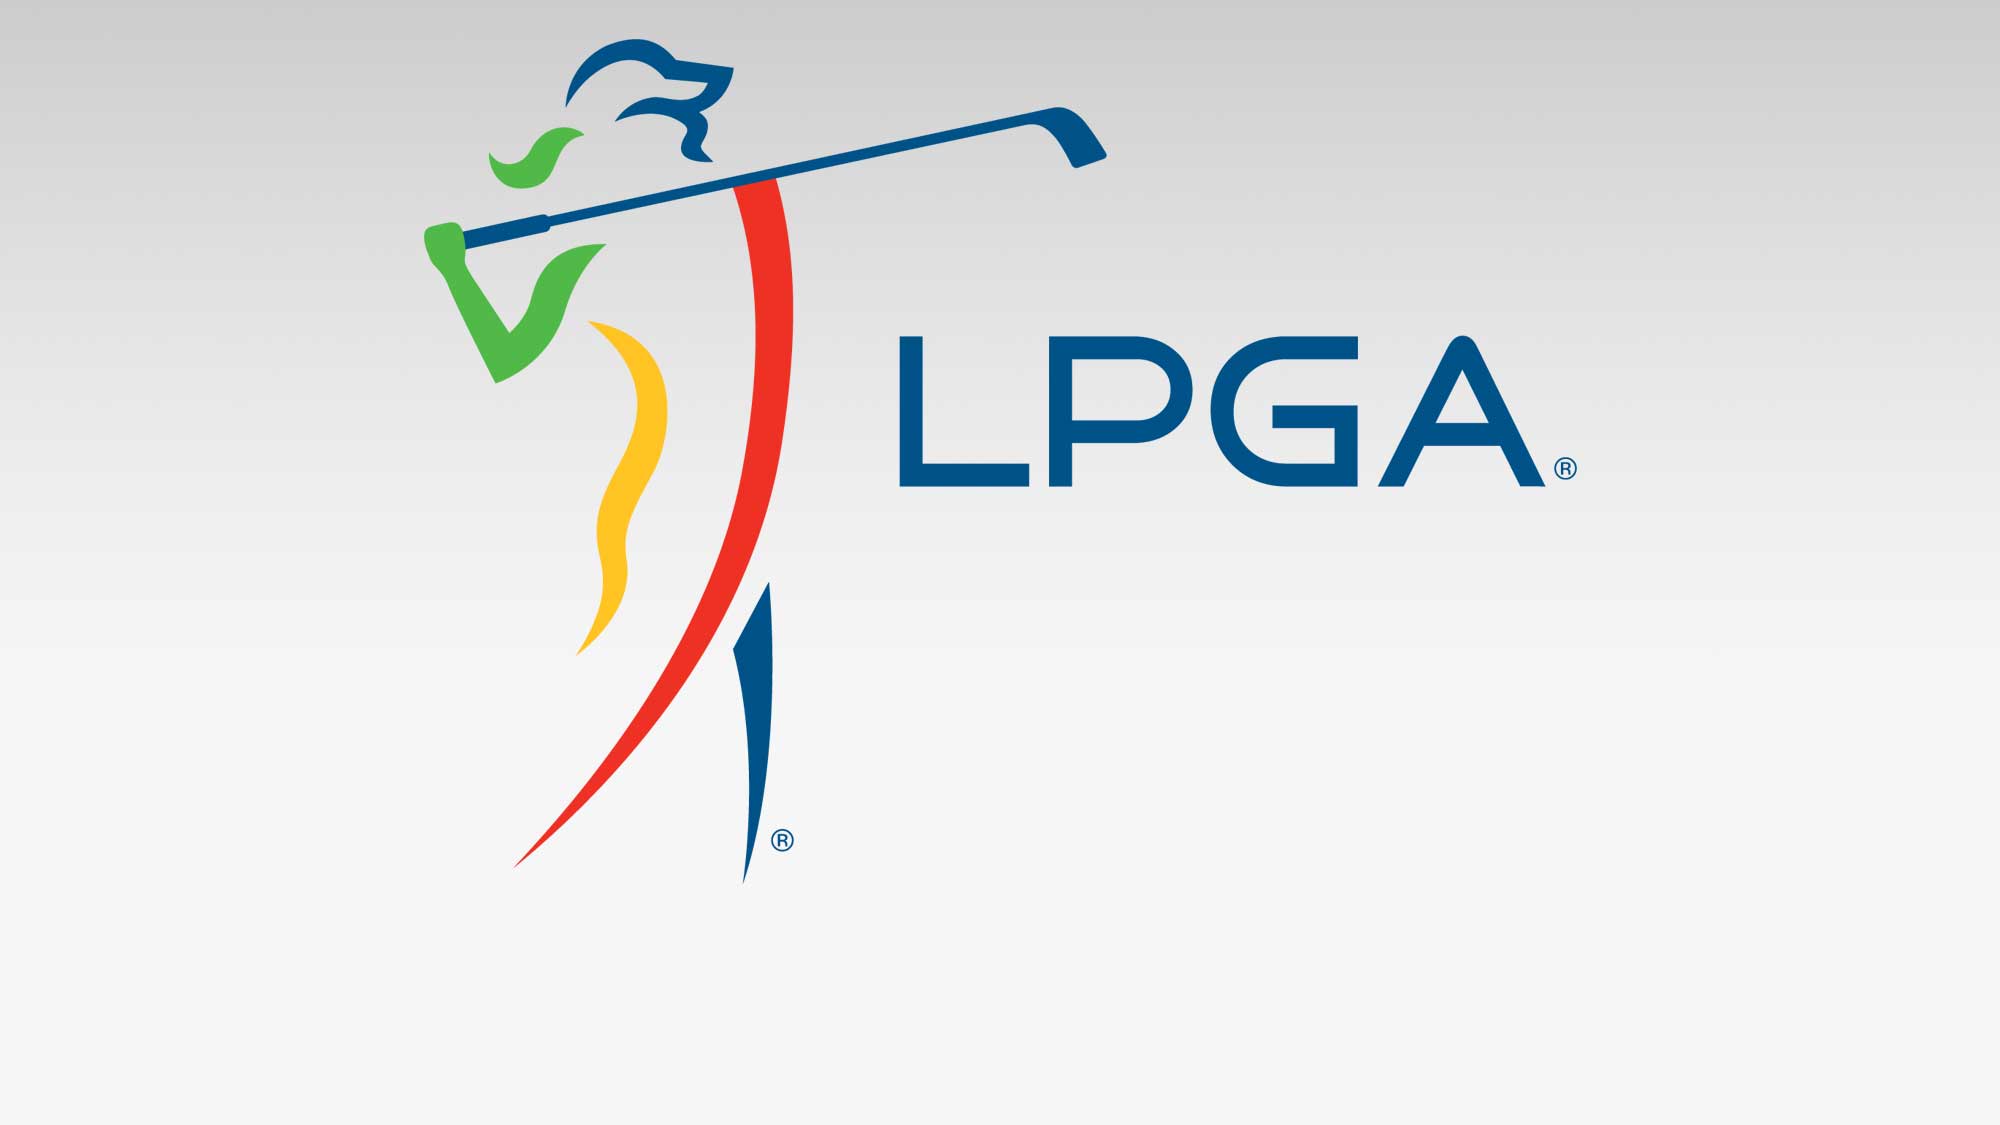 Oneida Nation to Sponsor New LPGA Tour Event in Green Bay in 2017